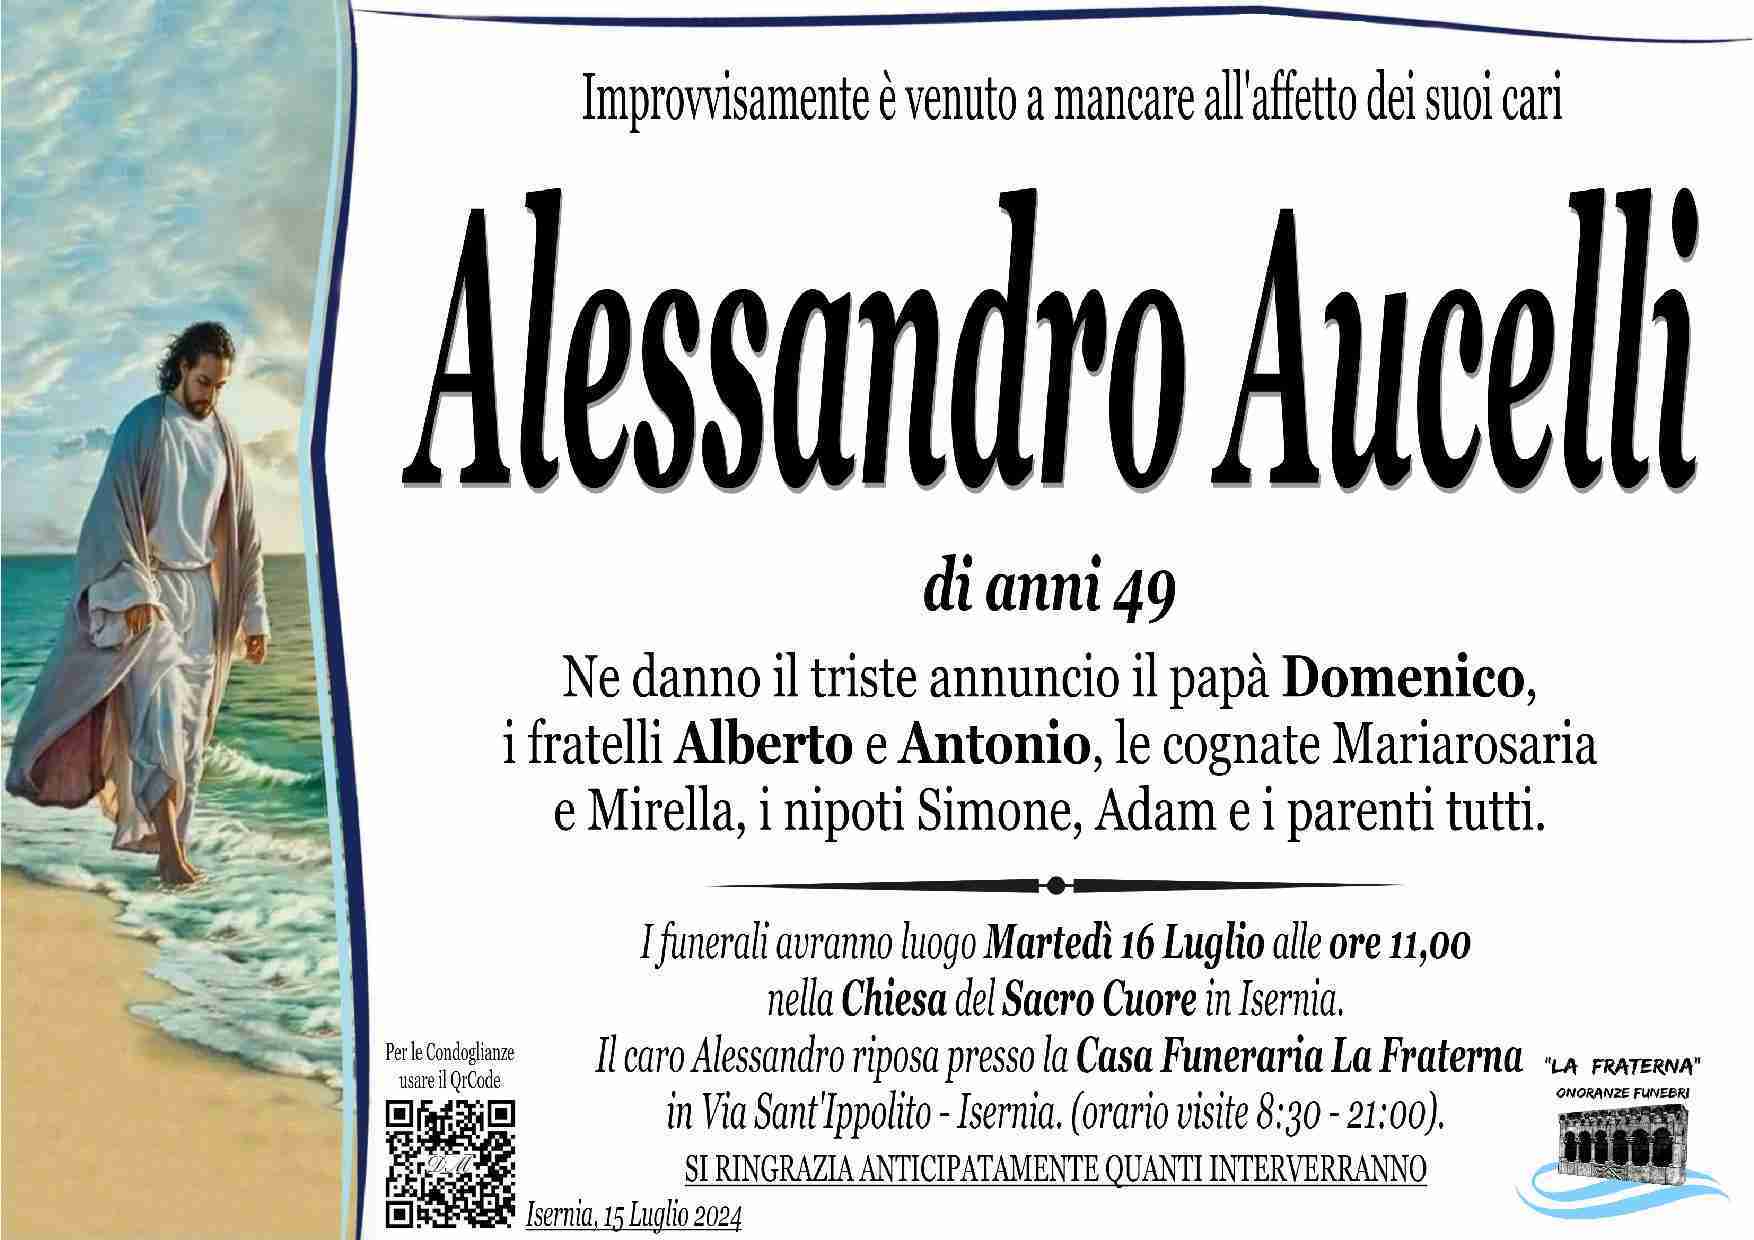 Alessandro Aucelli